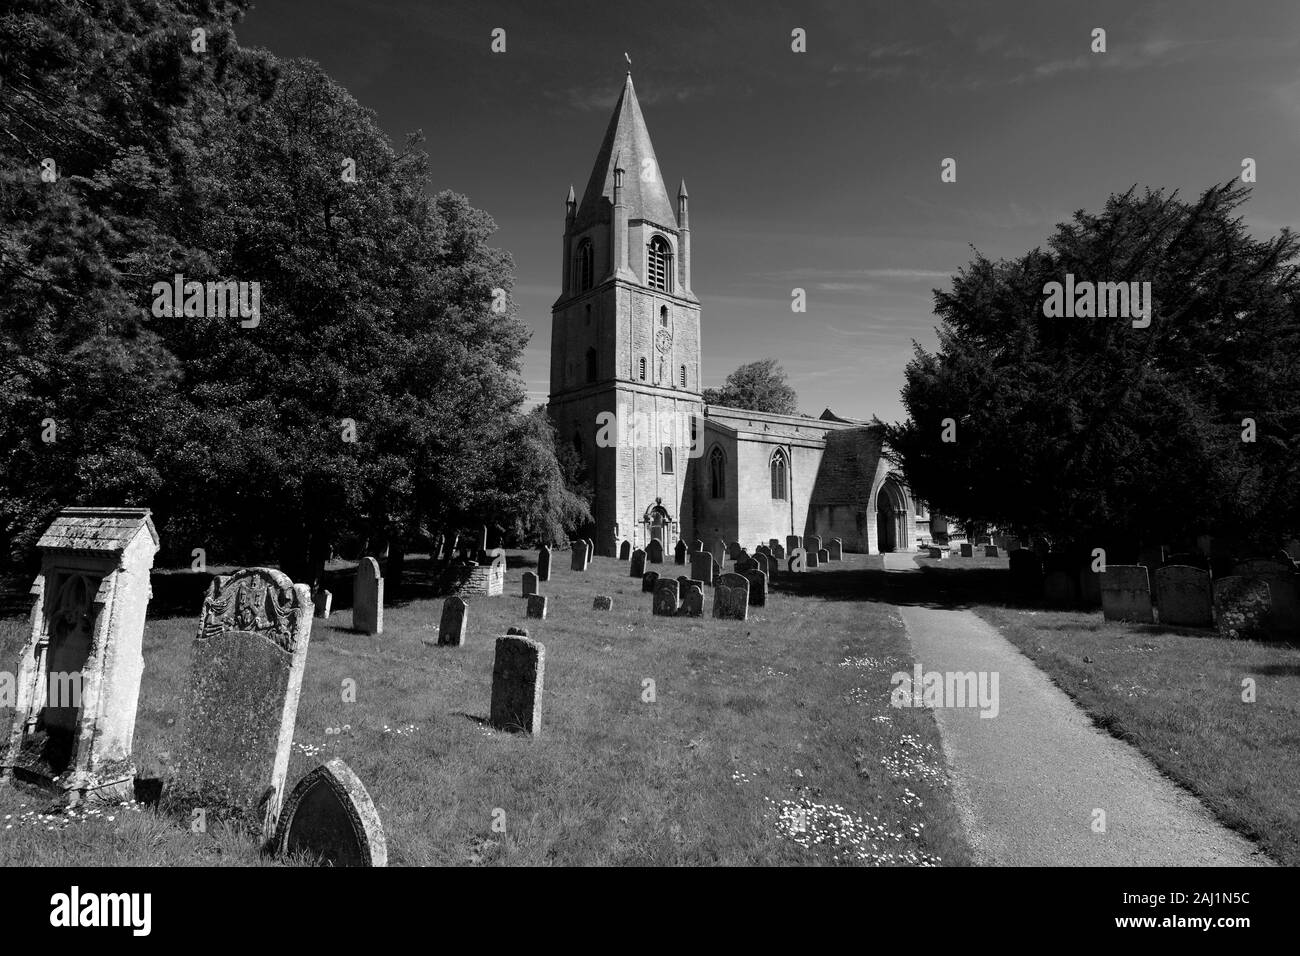 St Johns church, Barnack village, Cambridgeshire, England UK Stock Photo